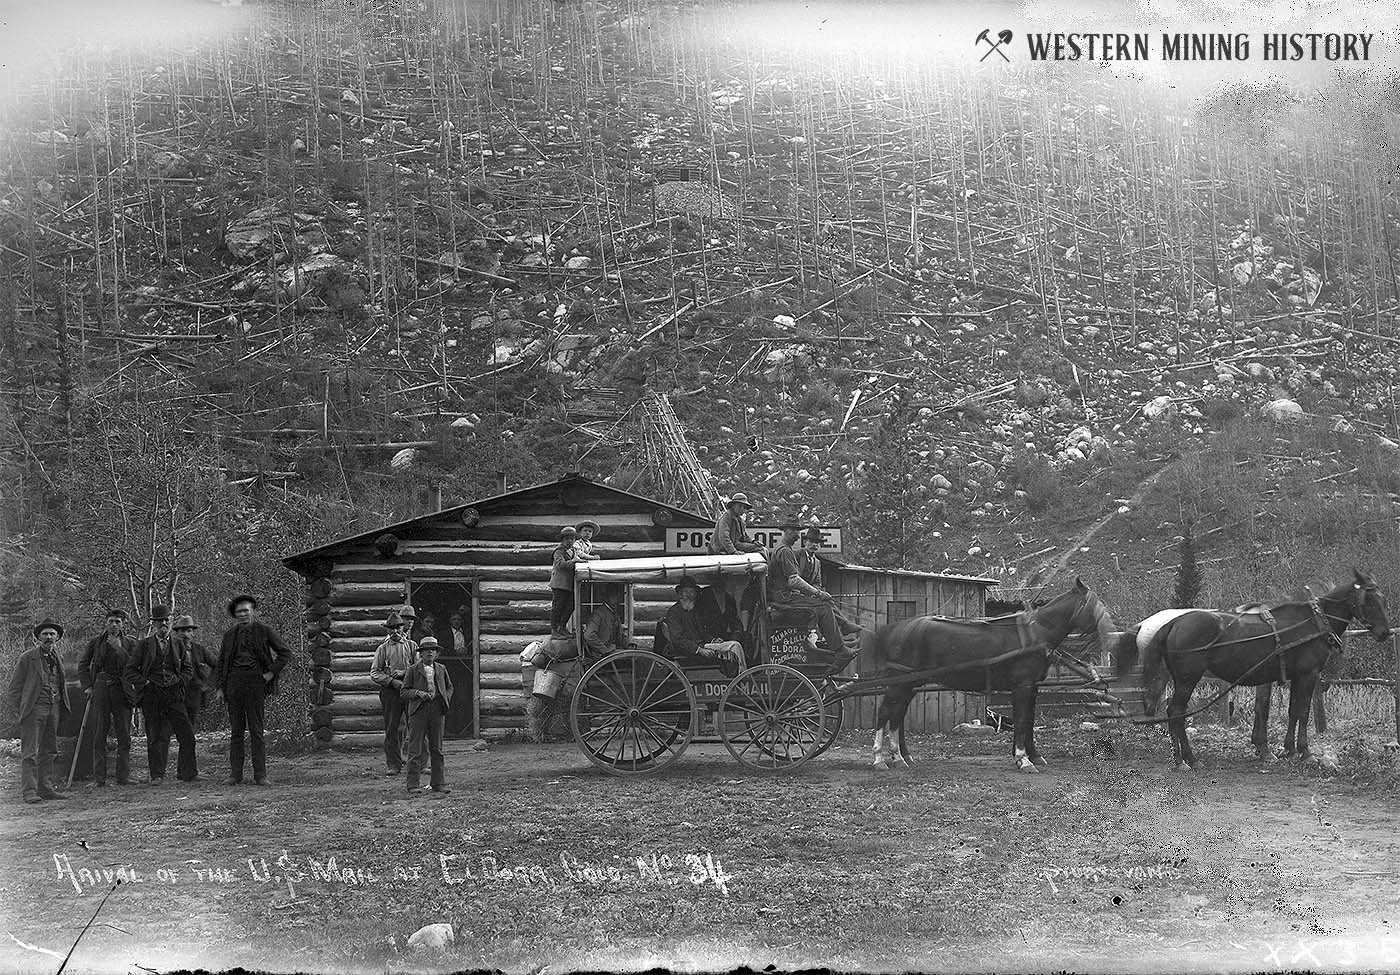 Arrival of the U.S. mail at Eldora, Colorado ca. 1897